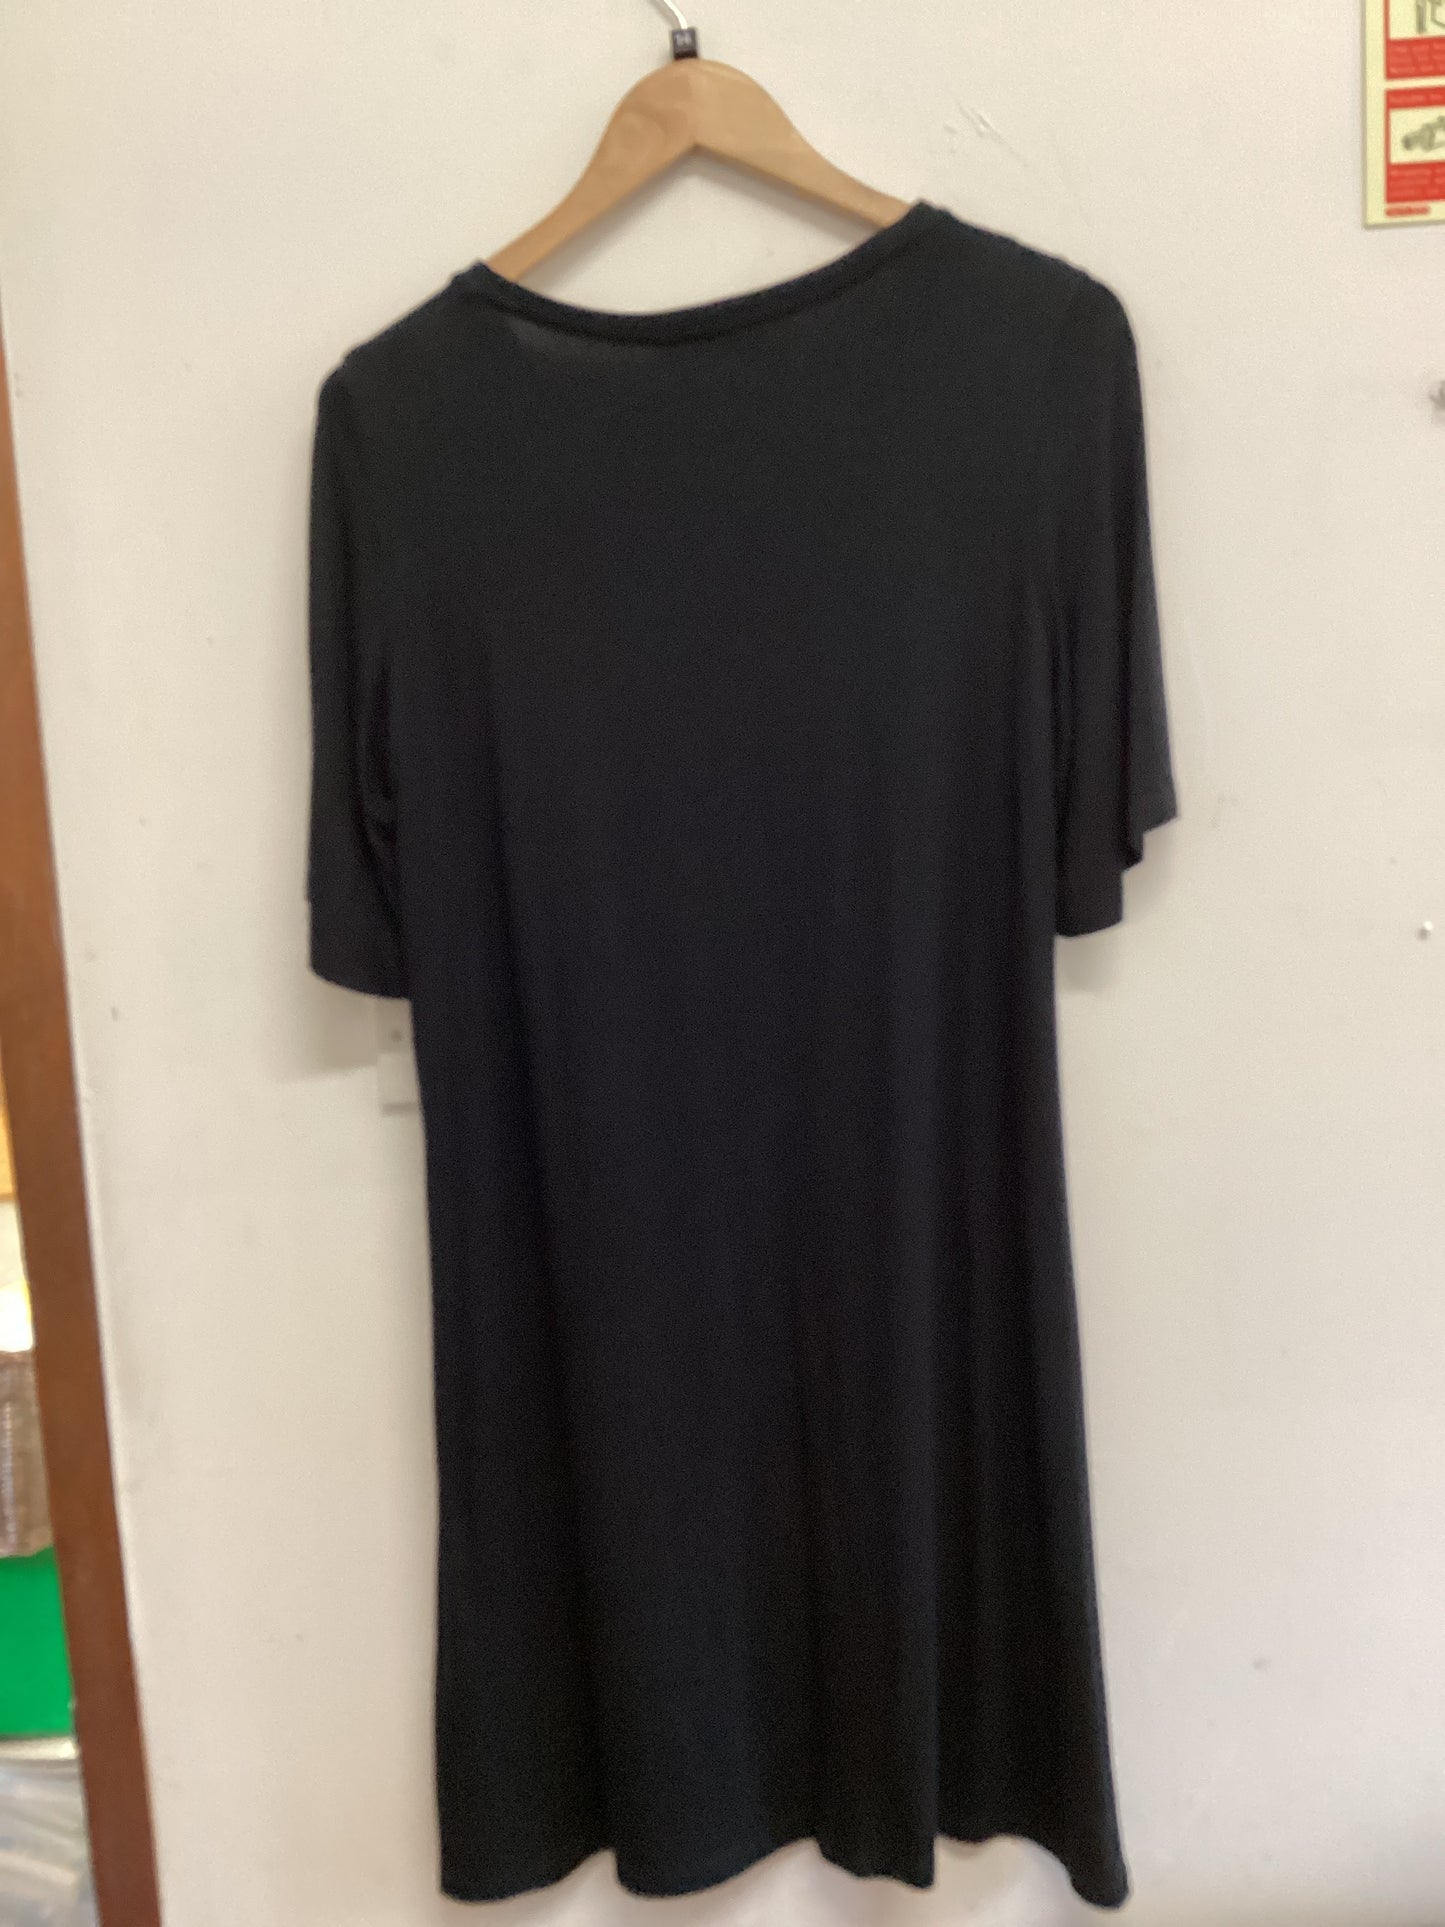 M&S Black Dress Size 14